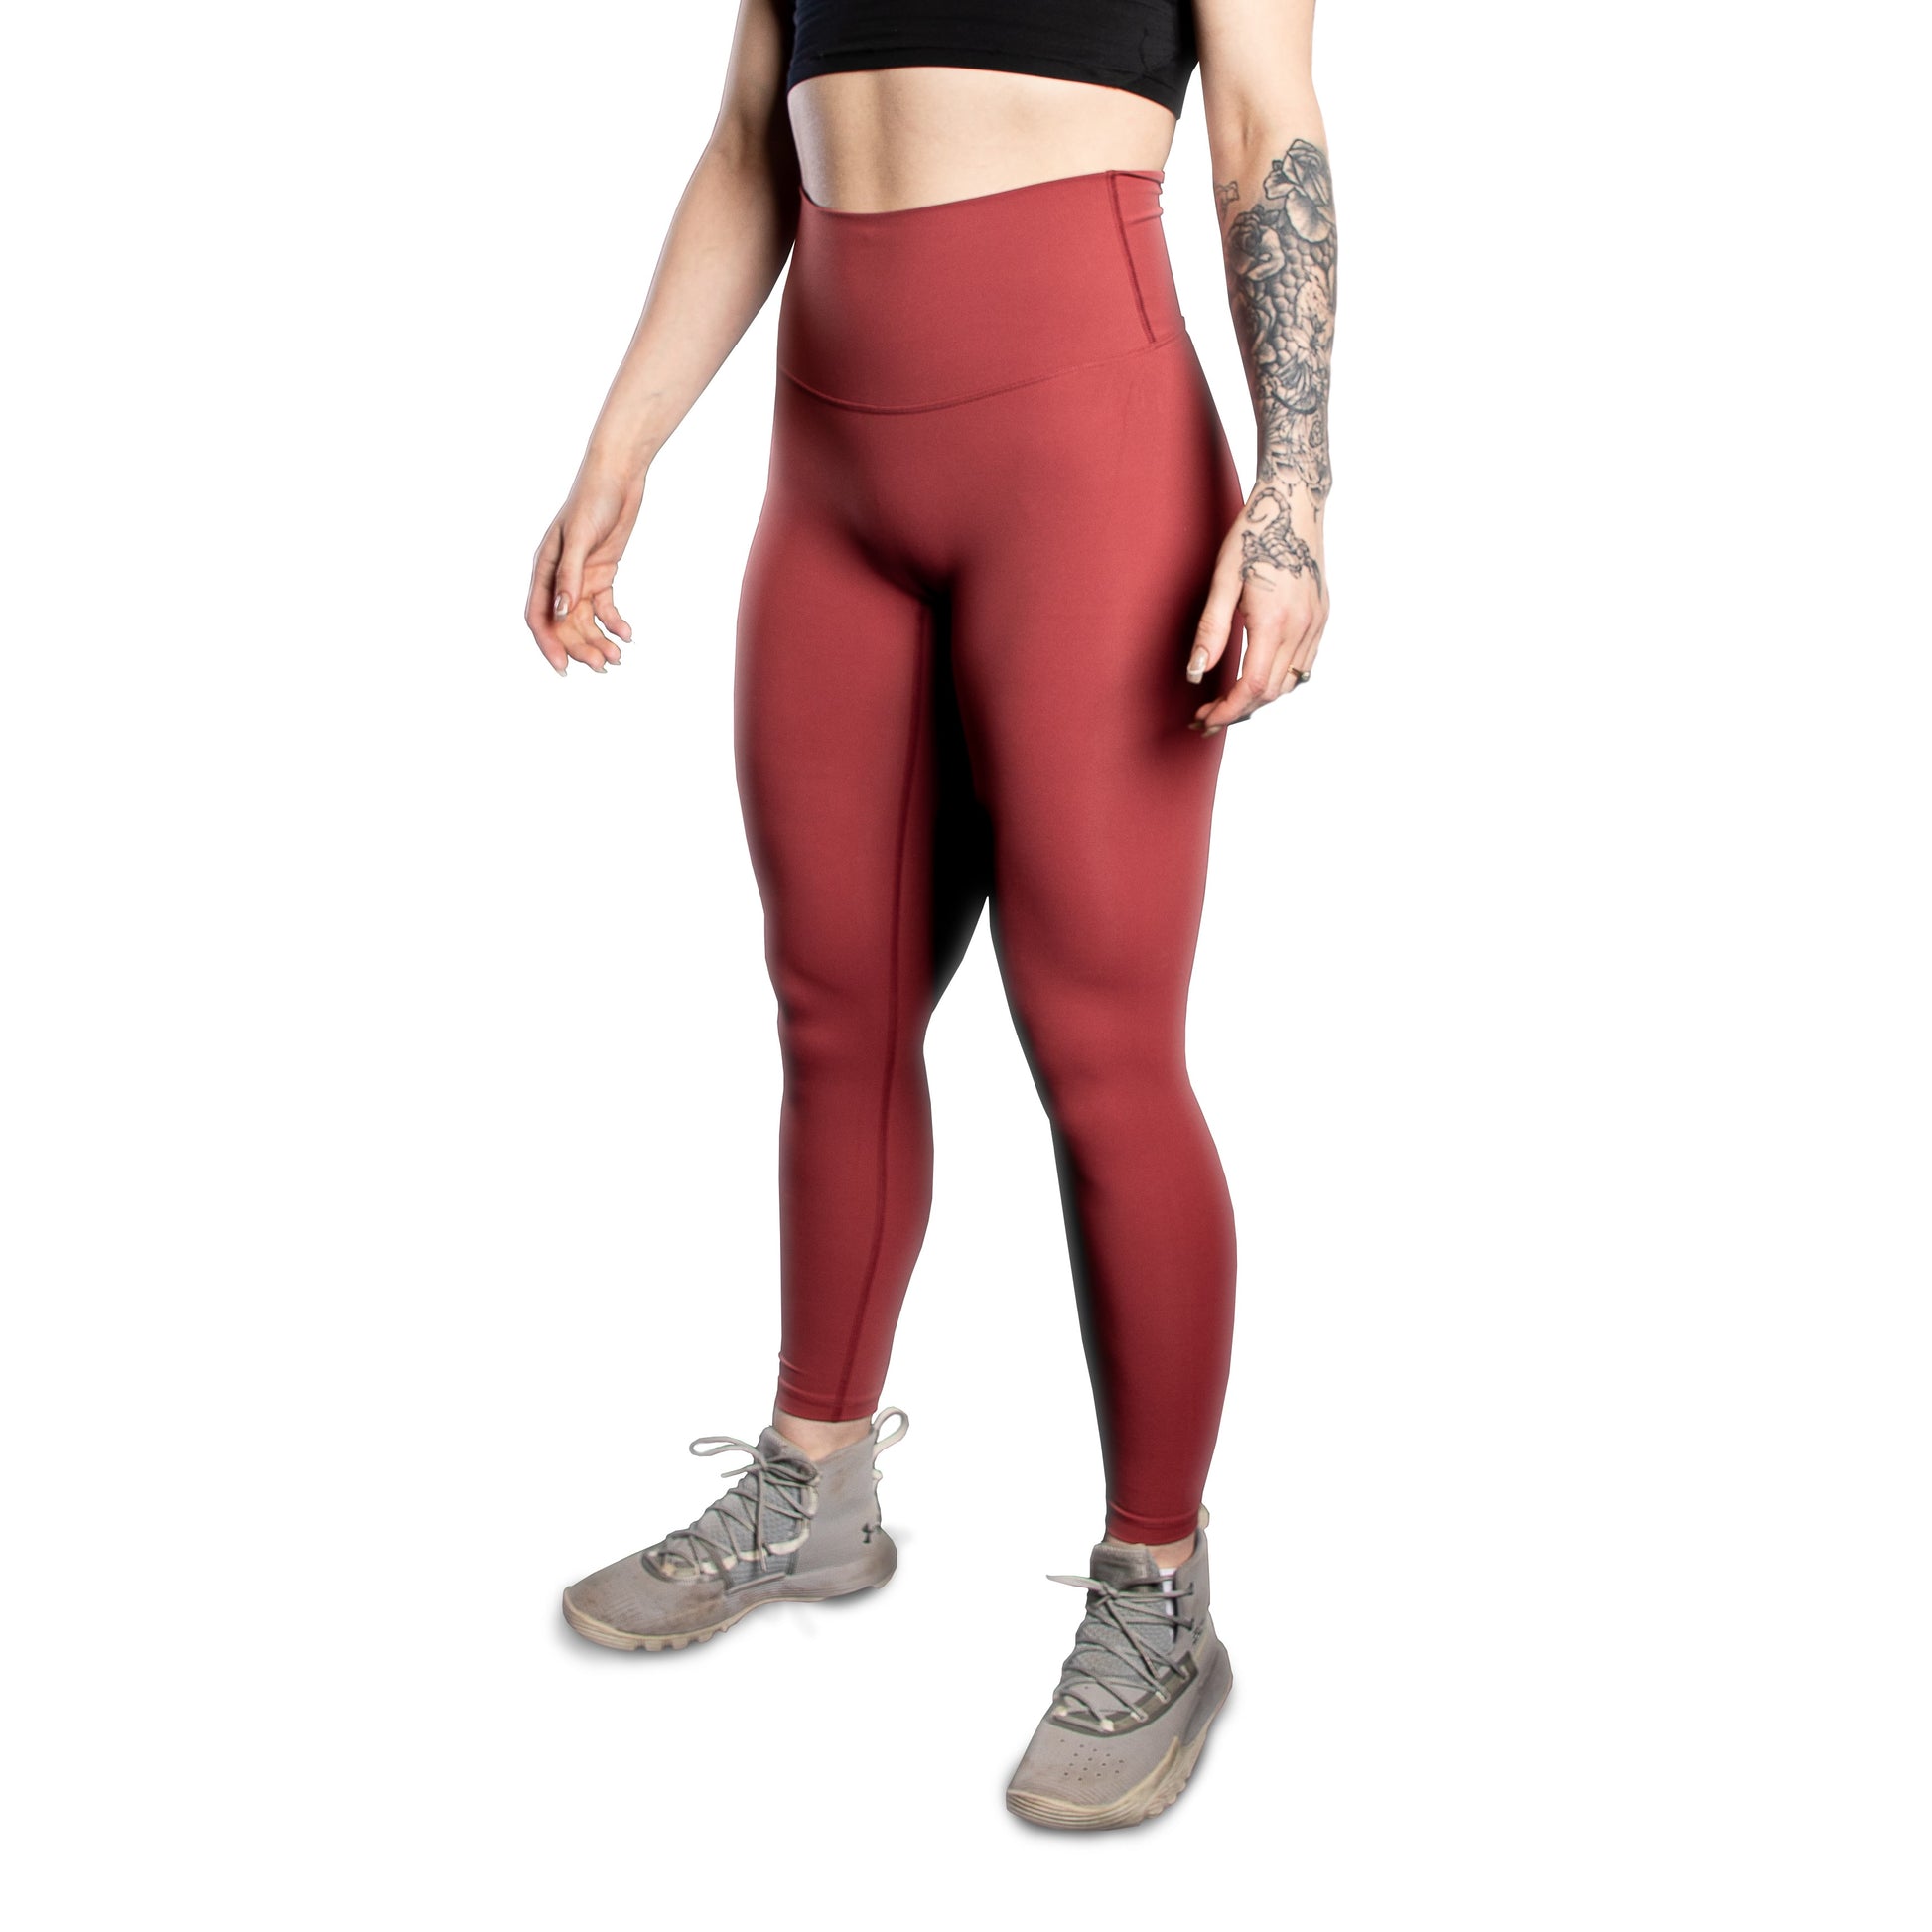 Sweat Proof Activewear, 7/8 Length Leggings - Dusty Rose